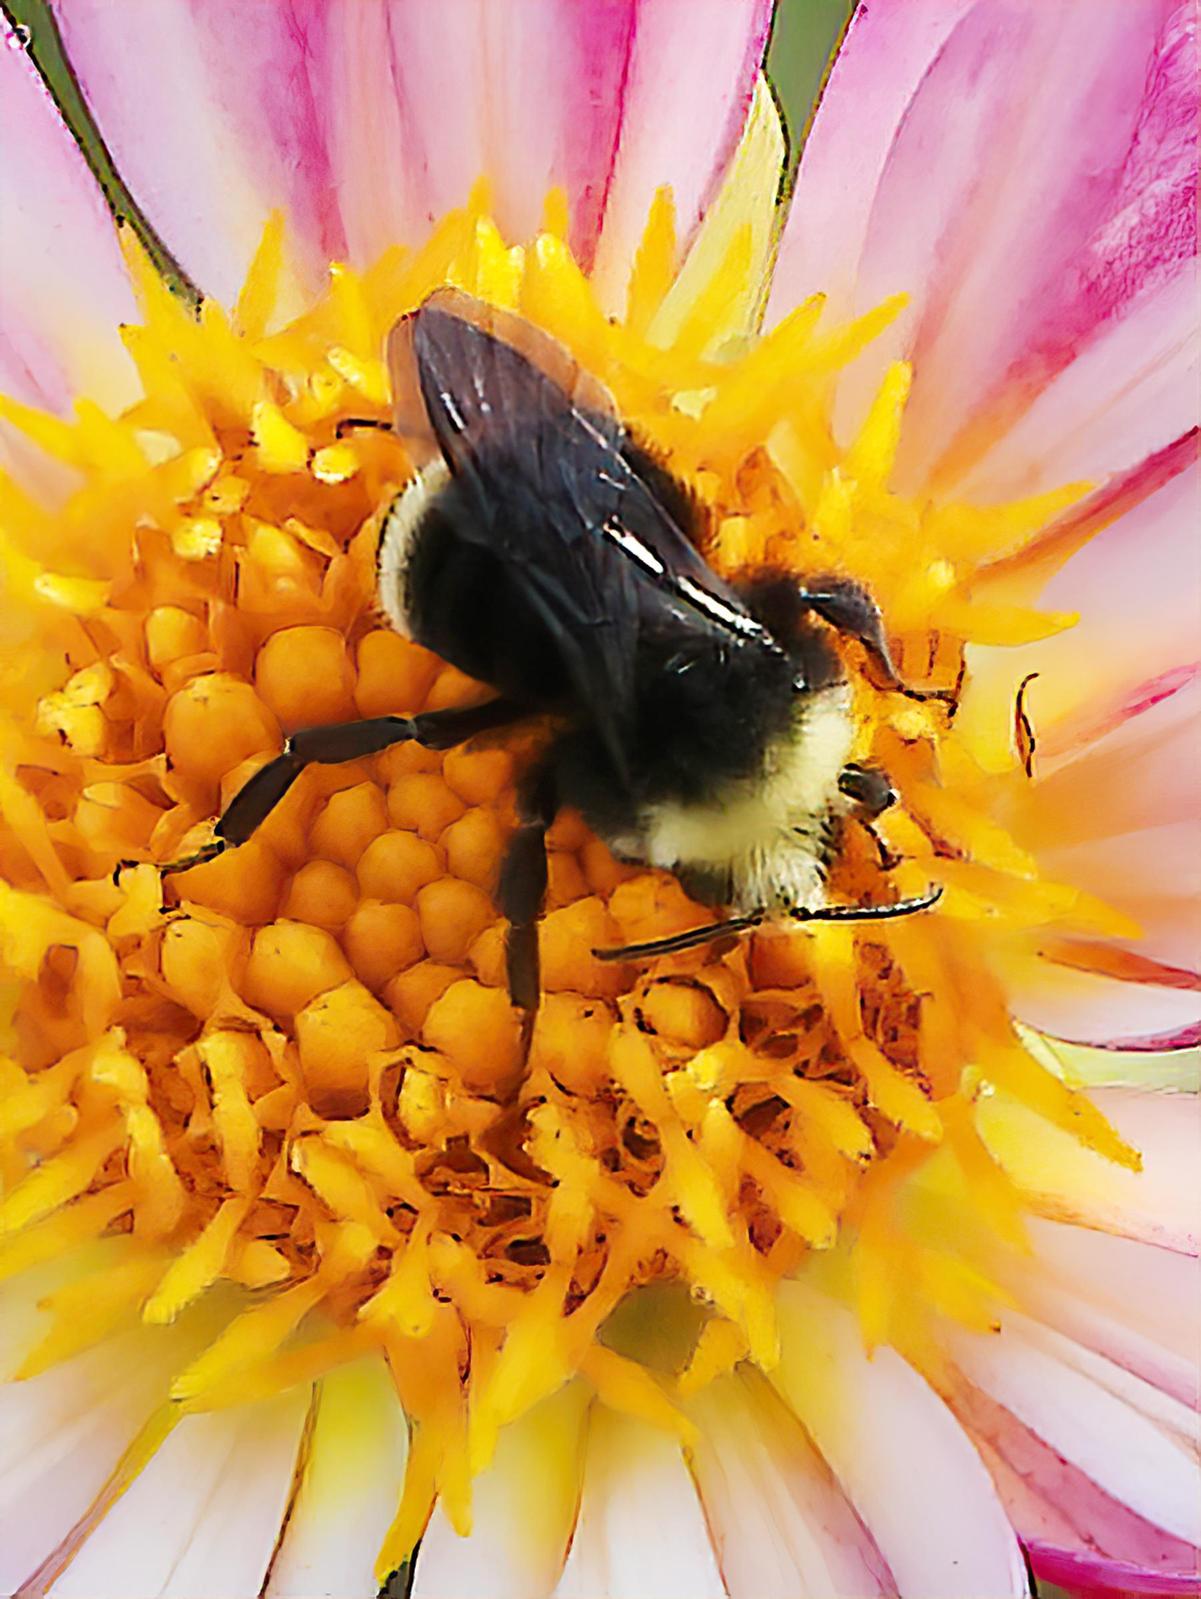 Yellow-faced bumble bee Photo by Dan Tallman